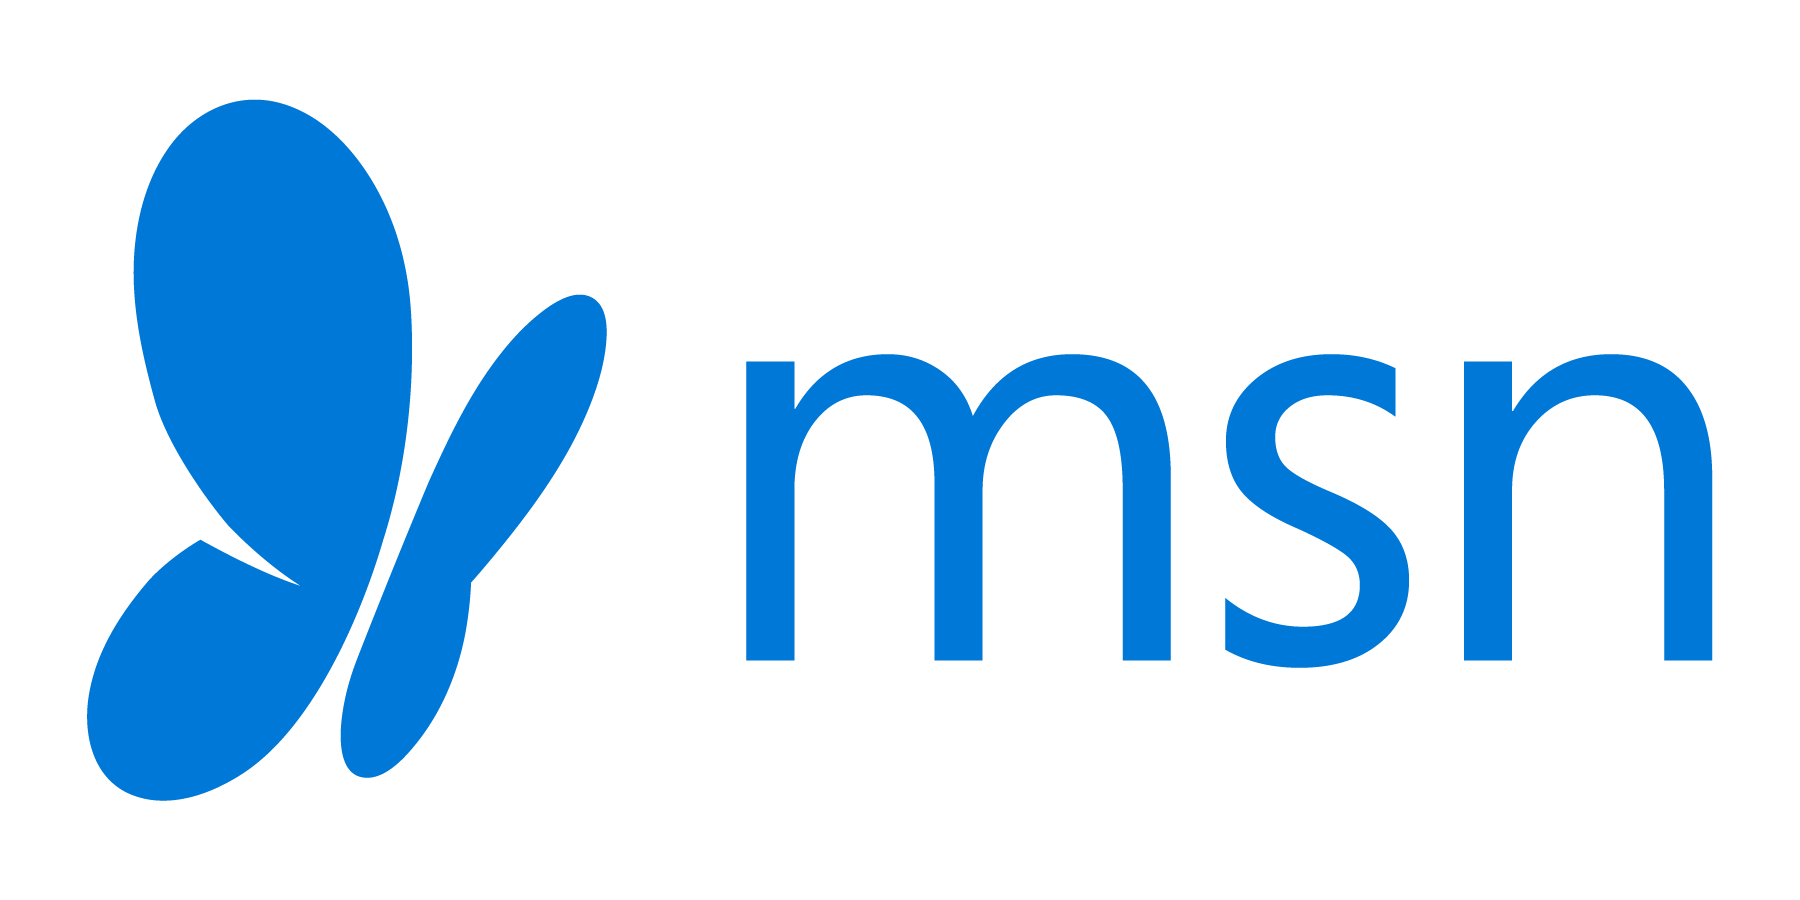 MSN Logo - MSN Logo, MSN Symbol, Meaning, History and Evolution